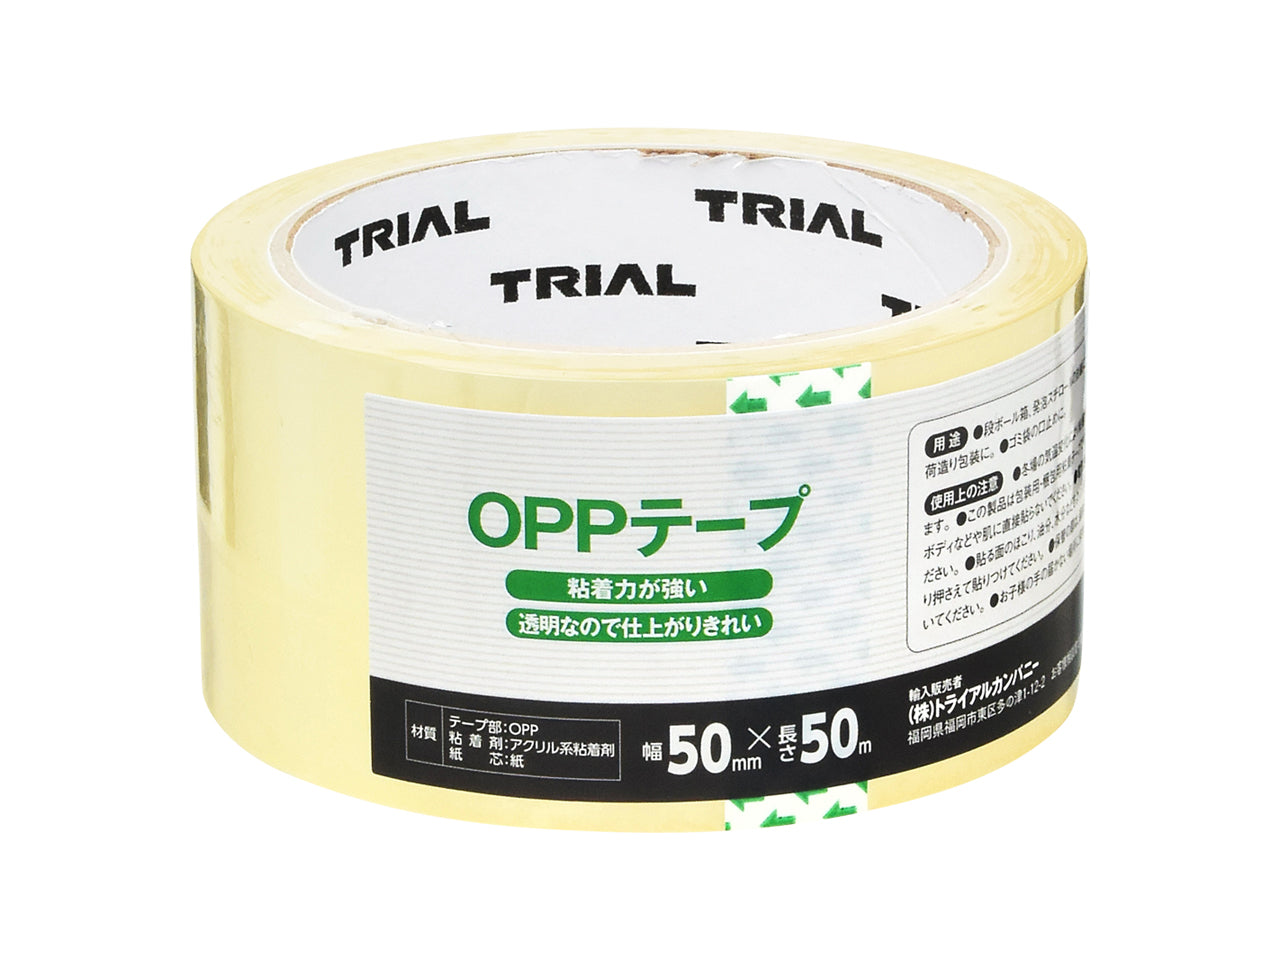 OPPテープ 幅15mm×長さ35m 160巻セット 送料無料 細幅透明OPPテープ 梱包資材 テープ 粘着テープ 作業用品　透明梱包用テープ セロー 梱包 テープ 1994257